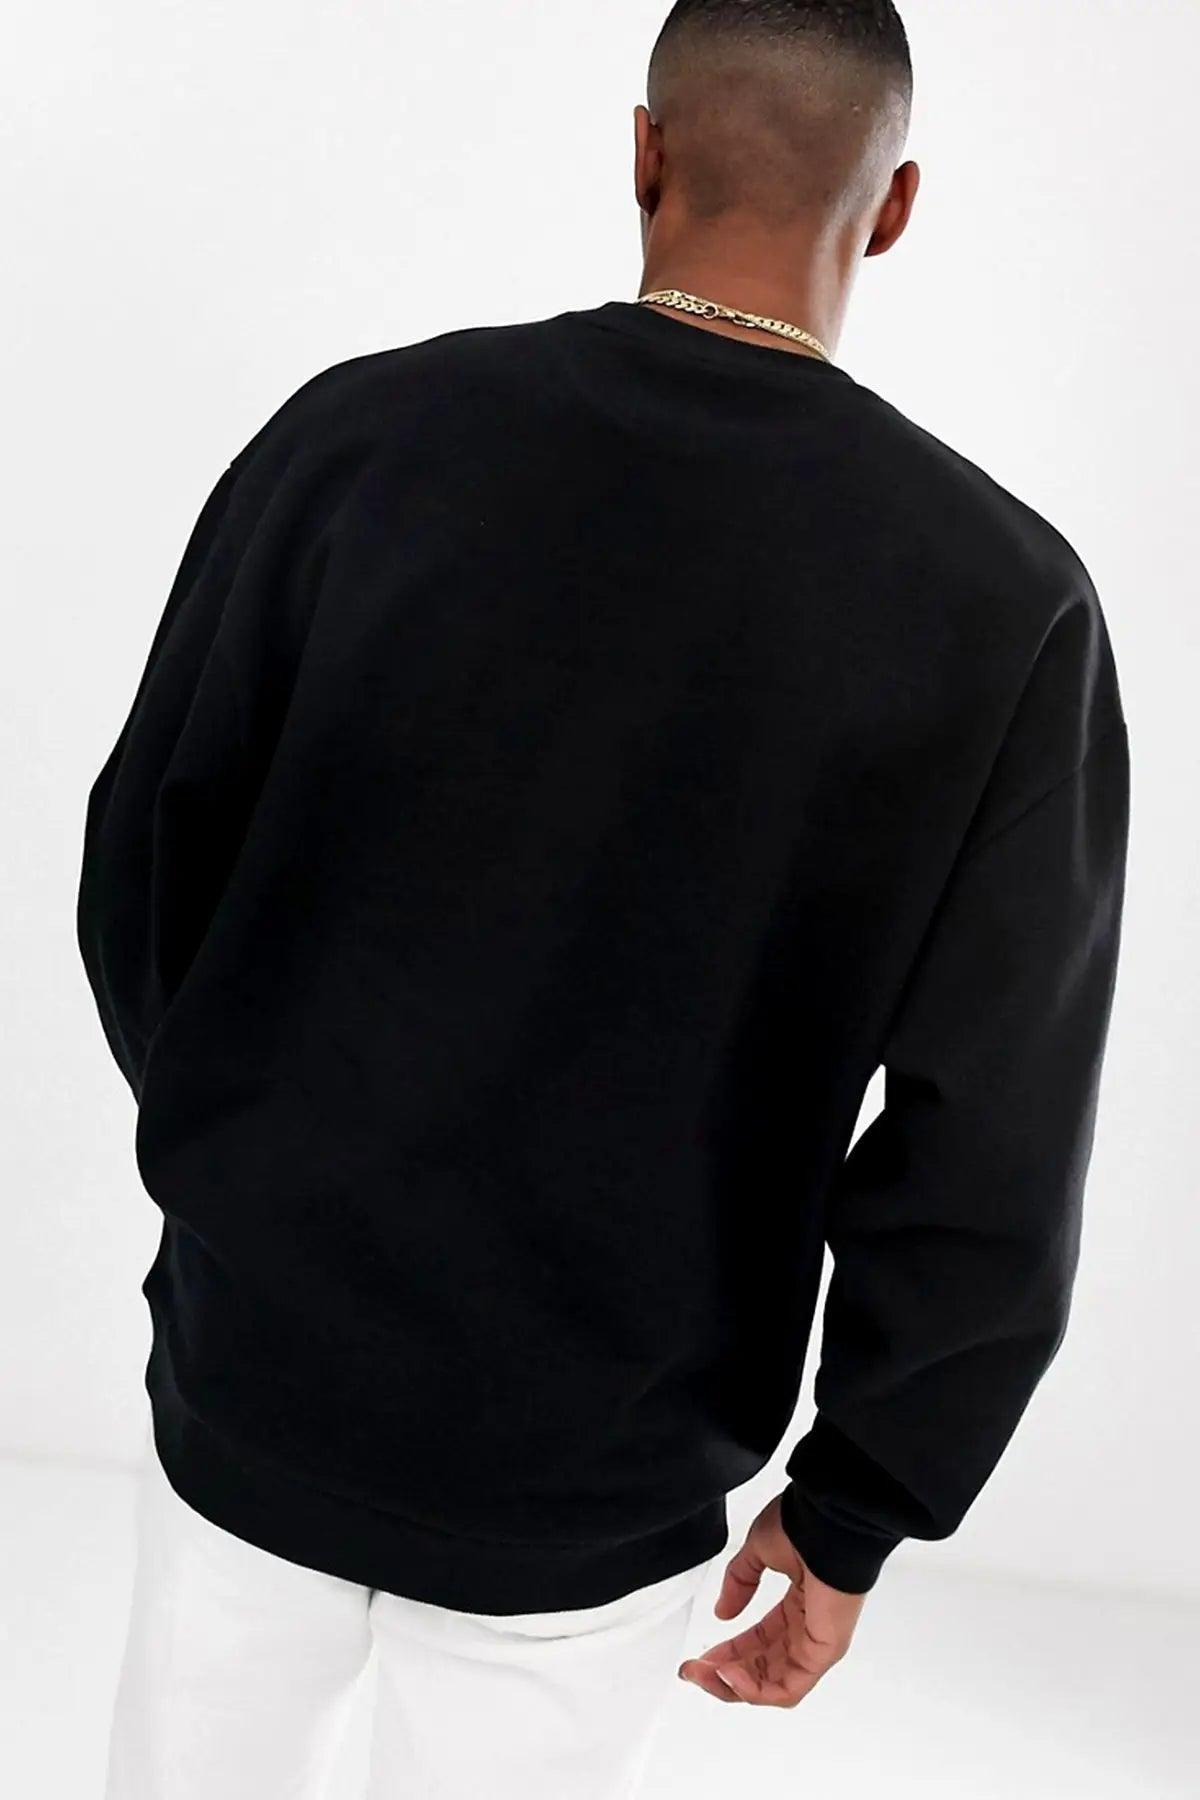 Boston City Oversize Erkek Sweatshirt - PΛSΛGE